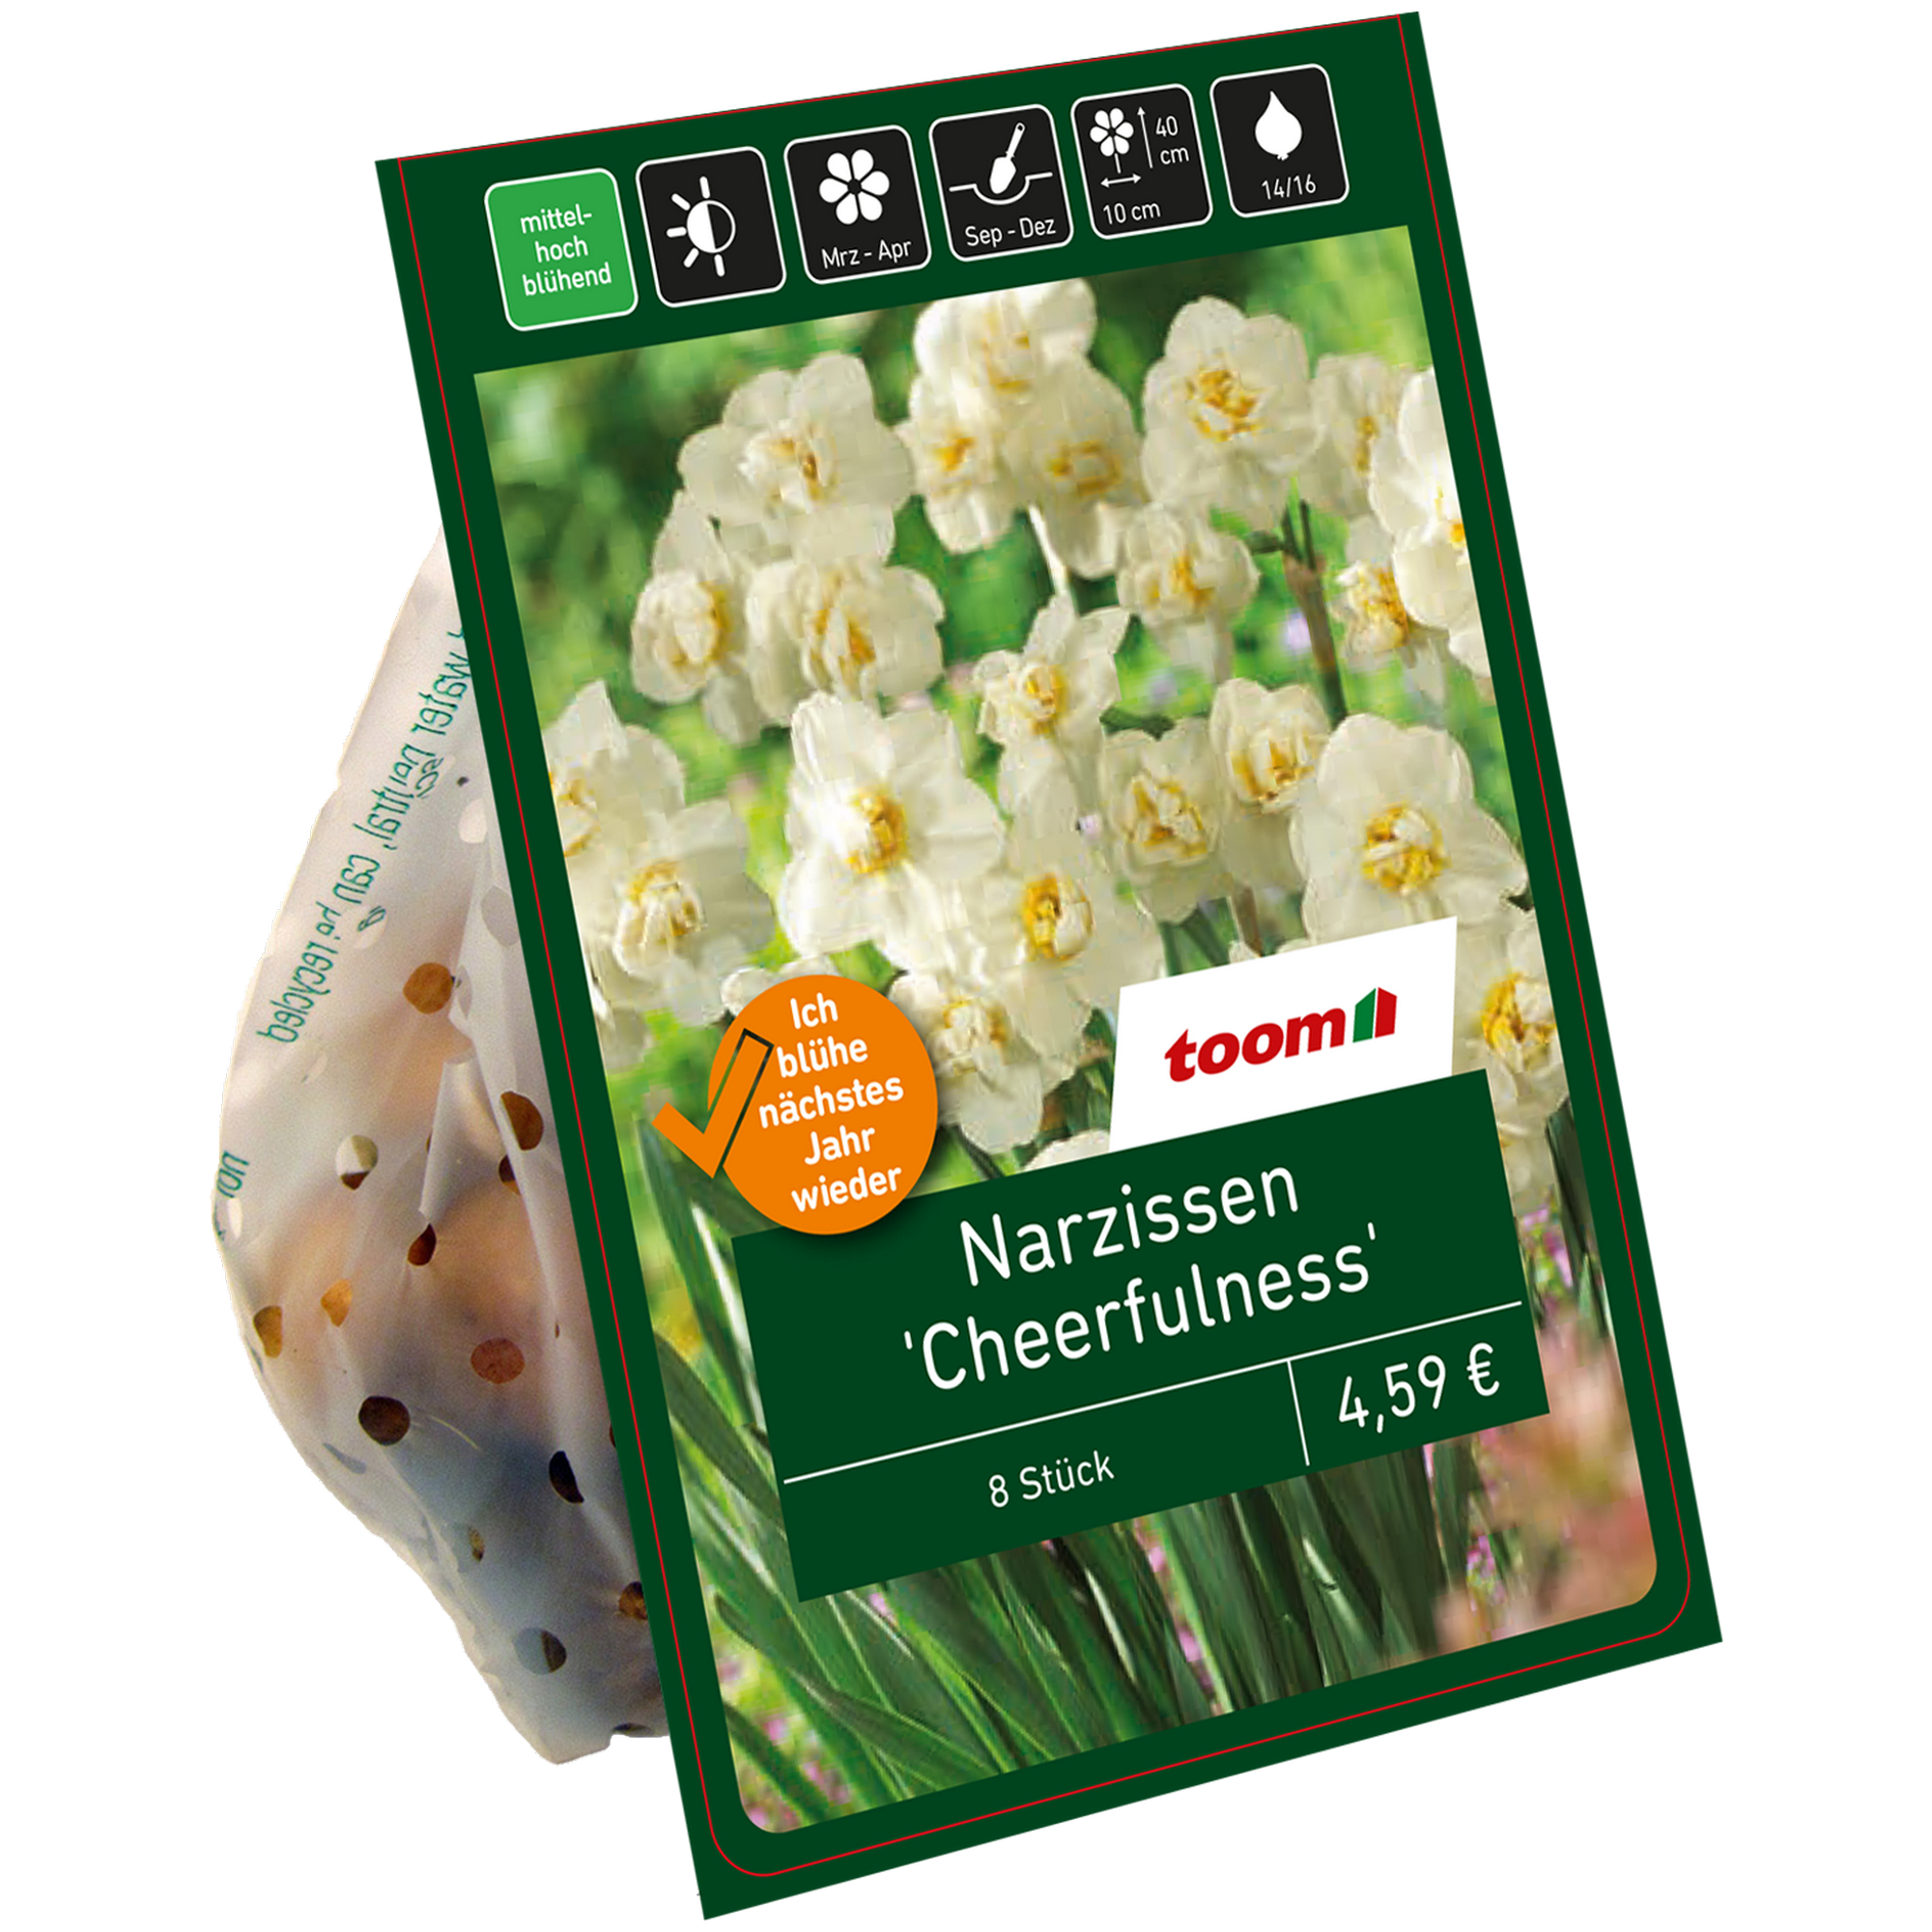 Narzisse 'Cheerfulness' weiß 8 Zwiebeln + product picture